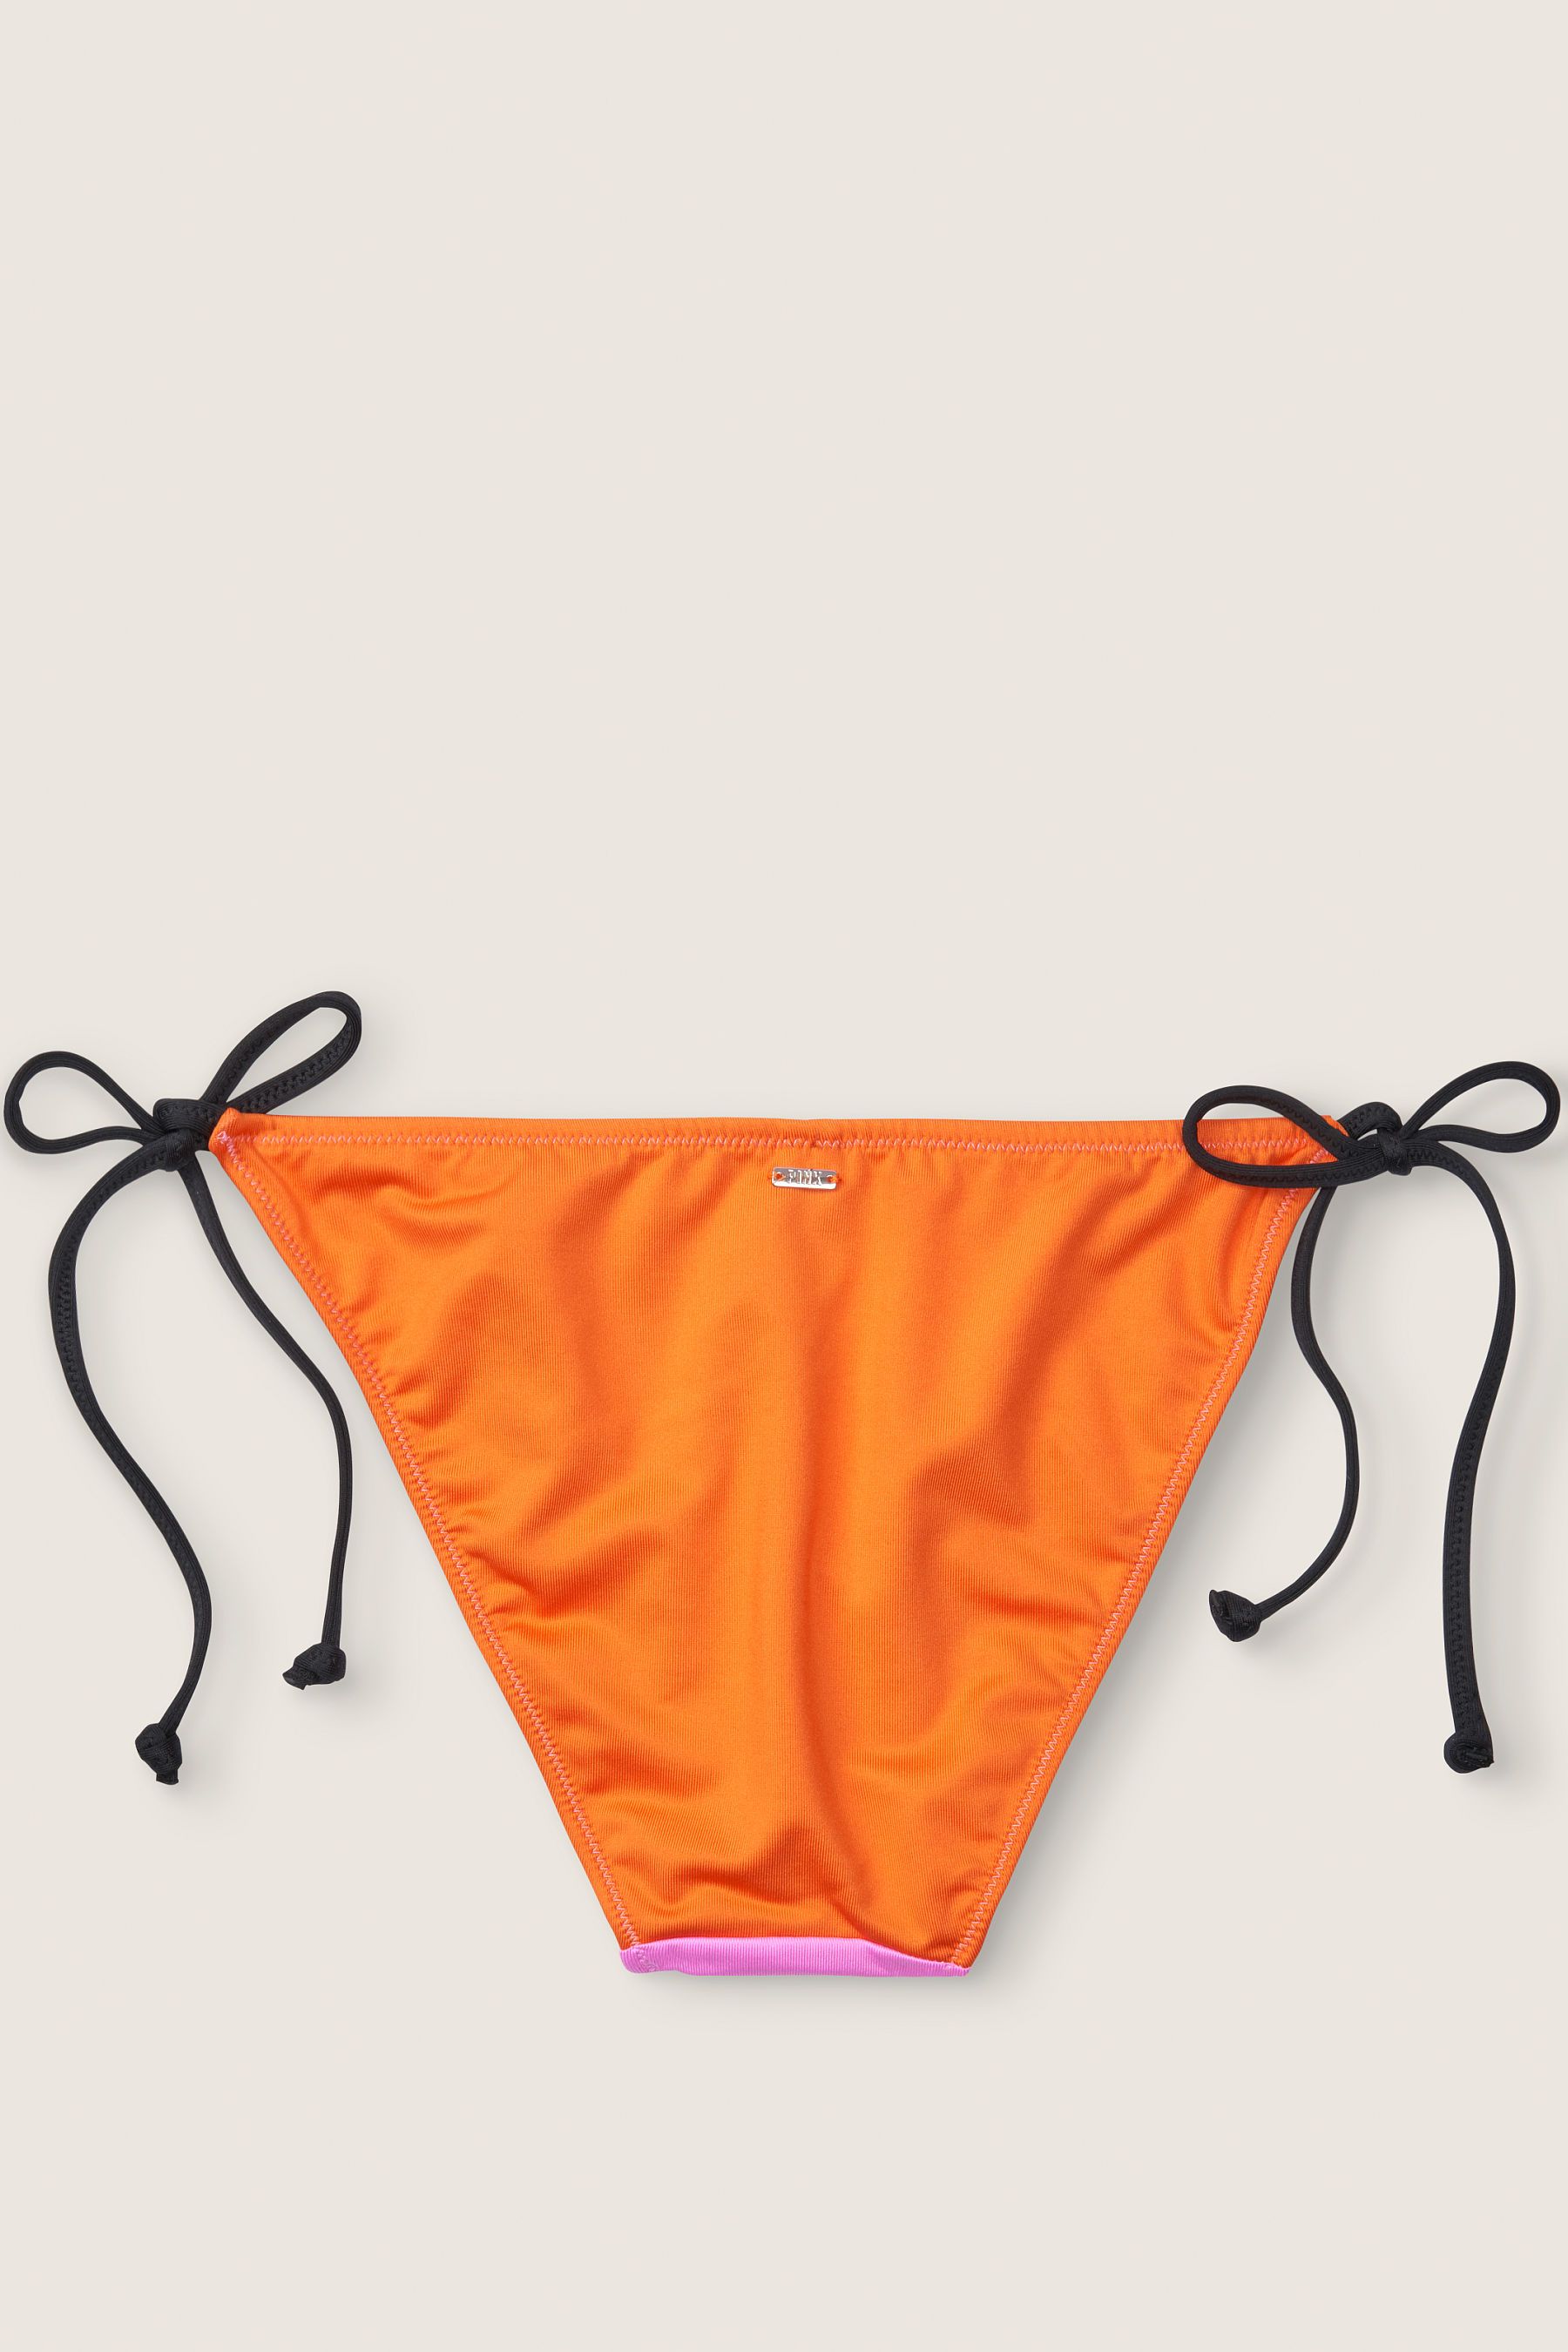 Buy Victoria's Secret PINK Swim Side Tie Bikini Bottom from the ...